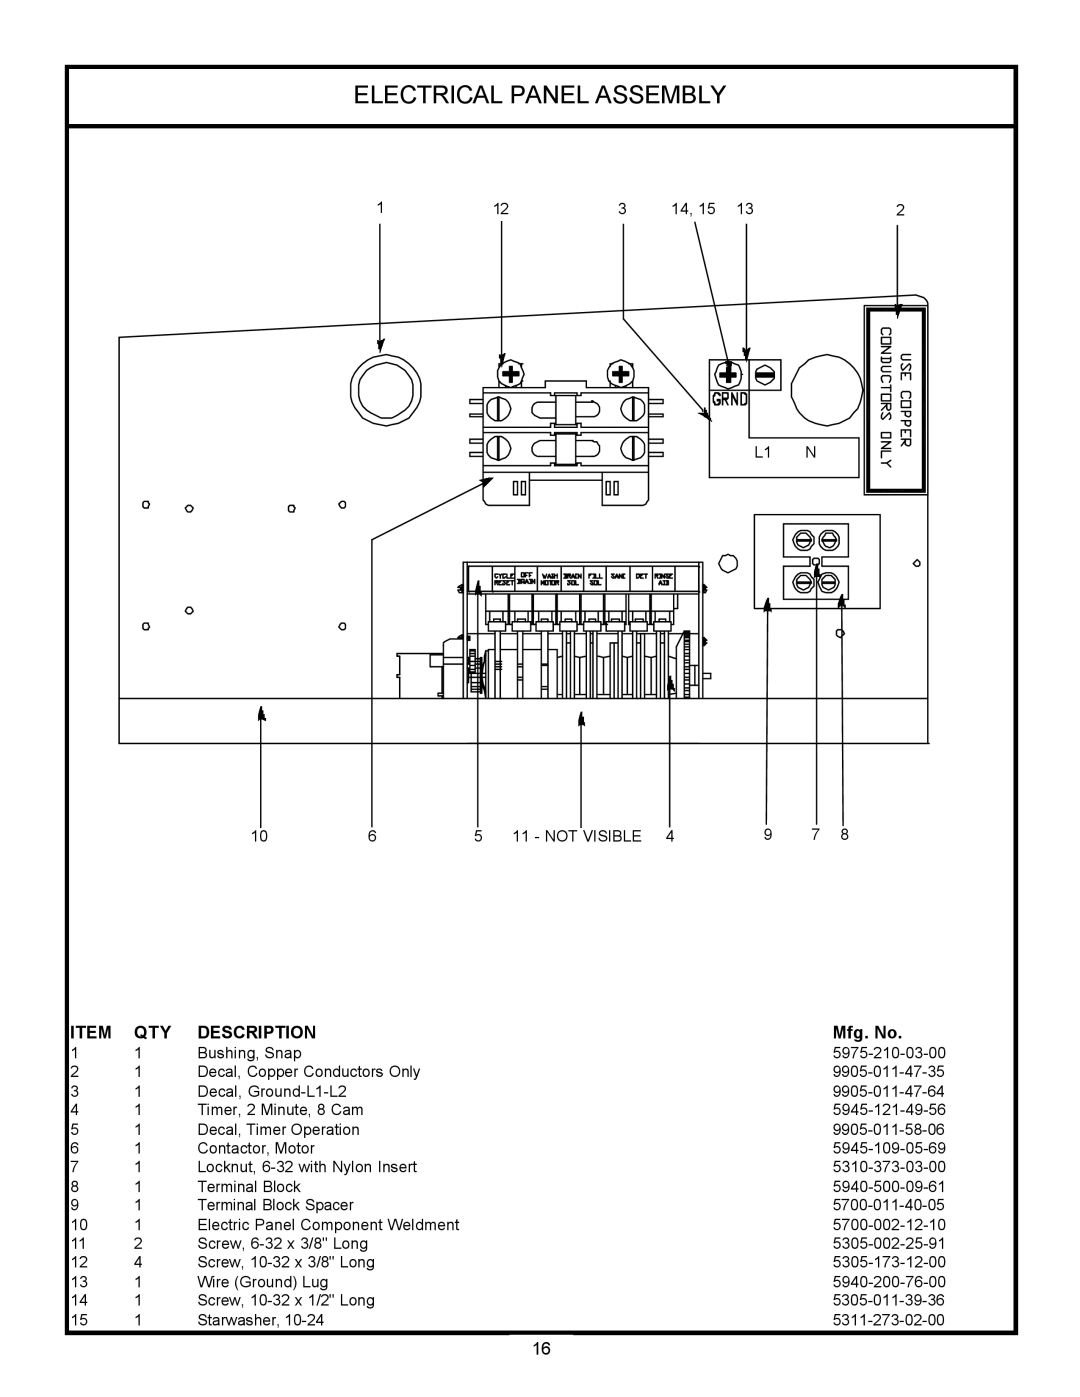 Jackson 24LTP, 24 LT technical manual Electrical Panel Assembly, Description, Mfg. No 